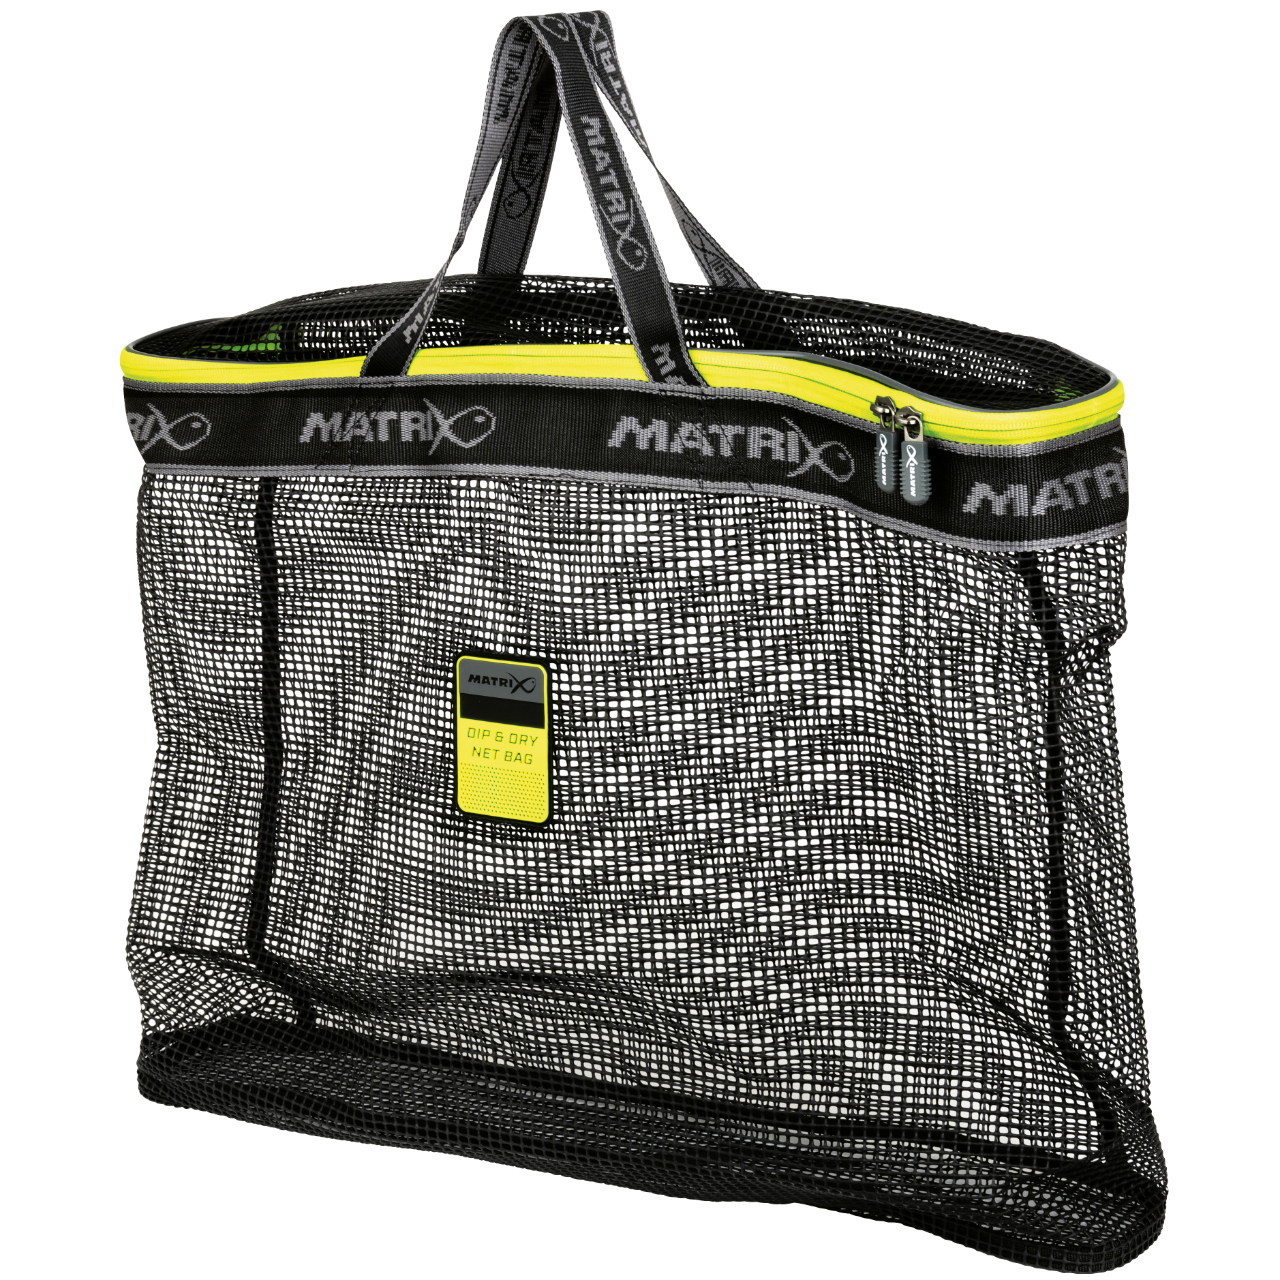 matrix Matrix Dip & Dry Mesh Net Bag - Large GLU108.jpg